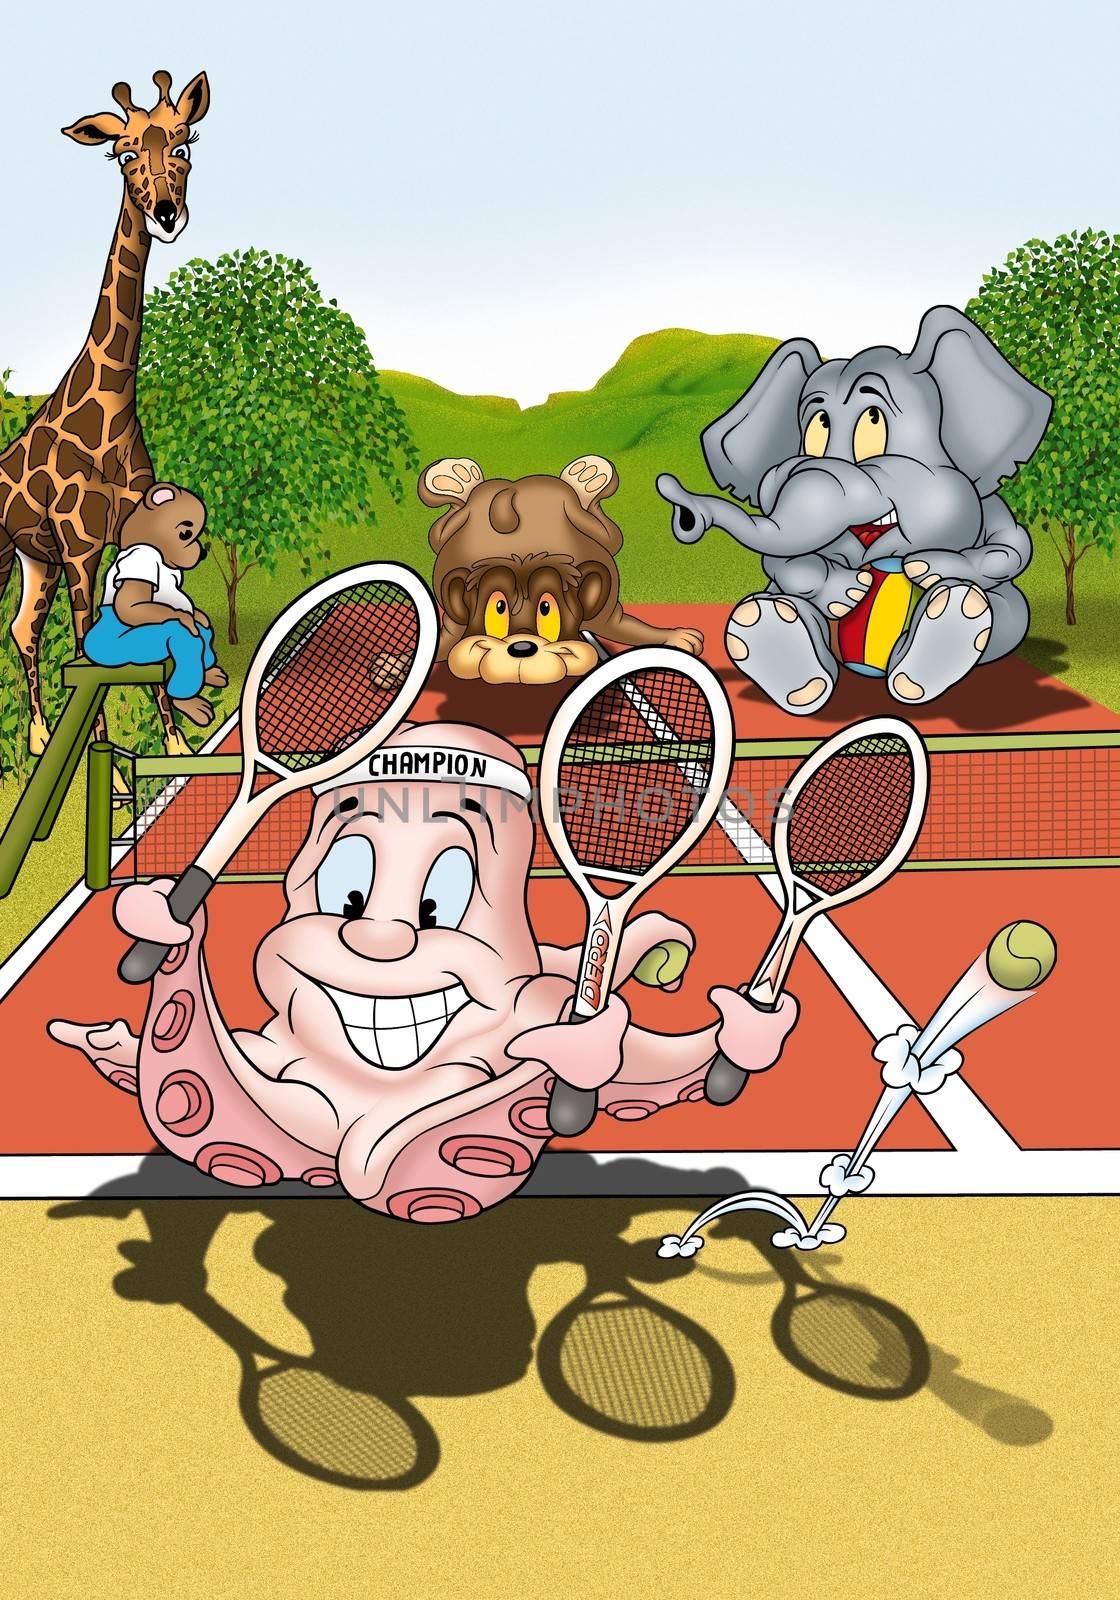 Octopus Tennis Player - Cartoon Illustration, Bitmap